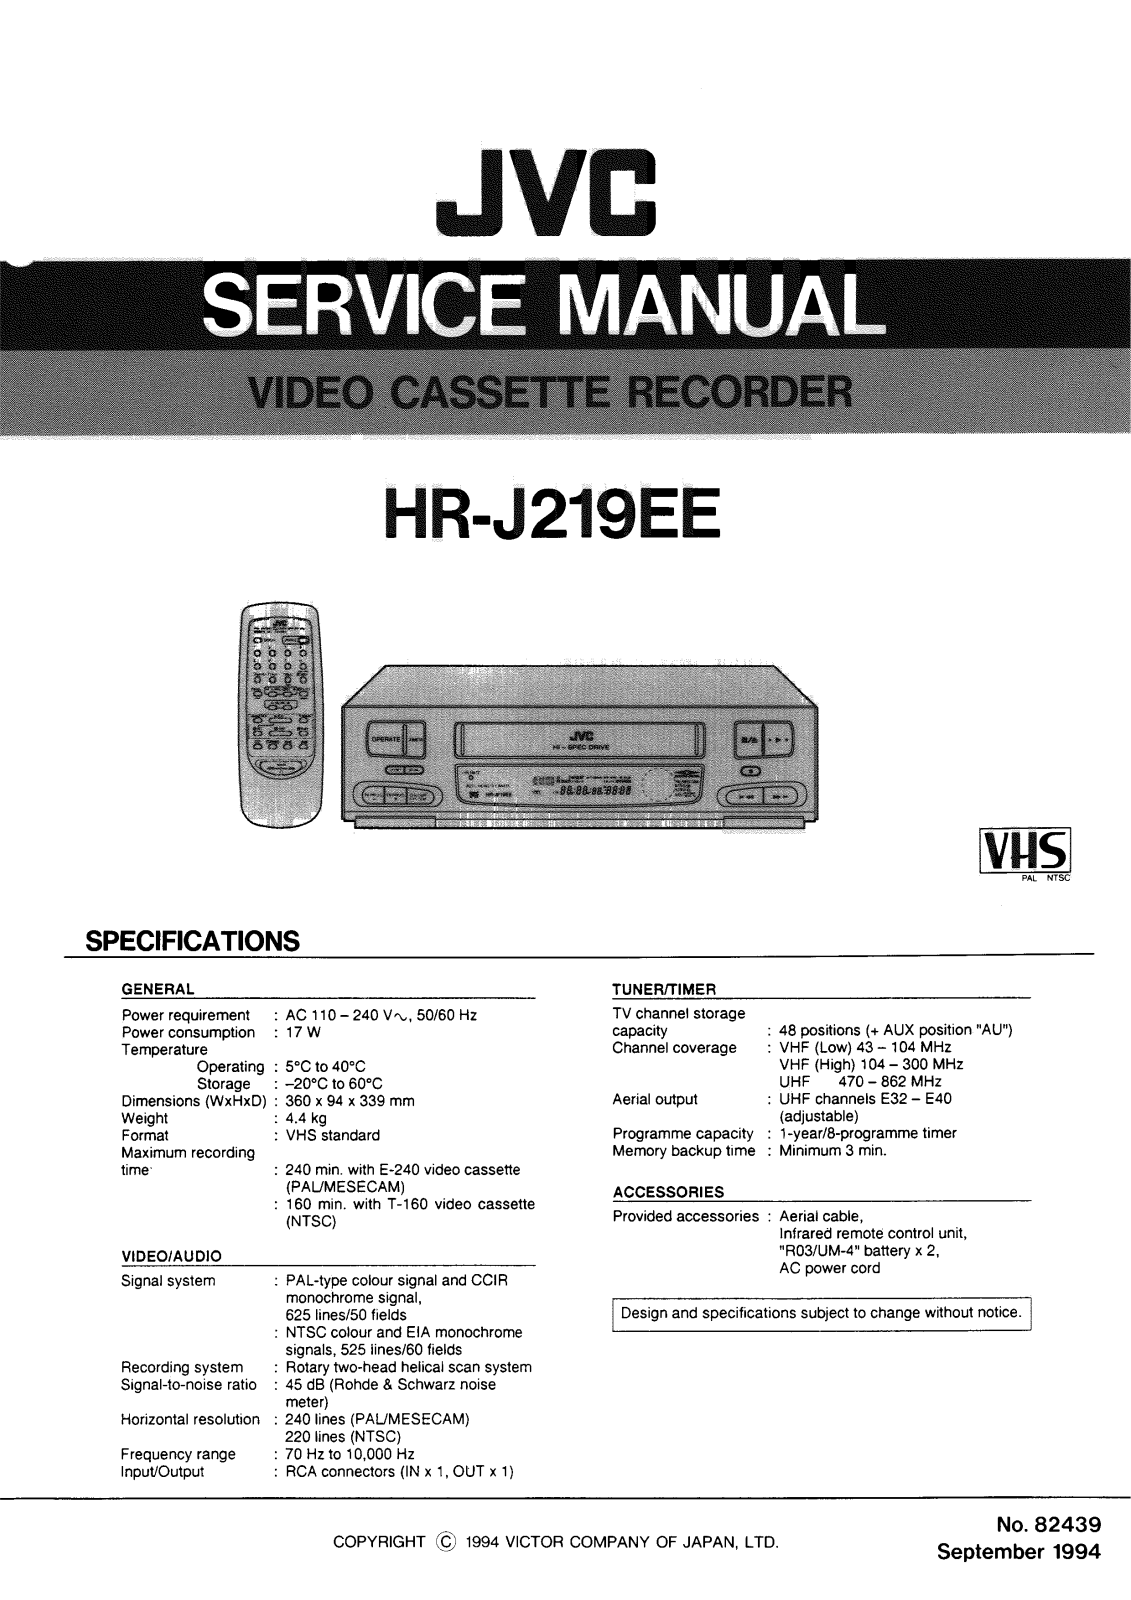 JVC HR-J219EE Service Manual